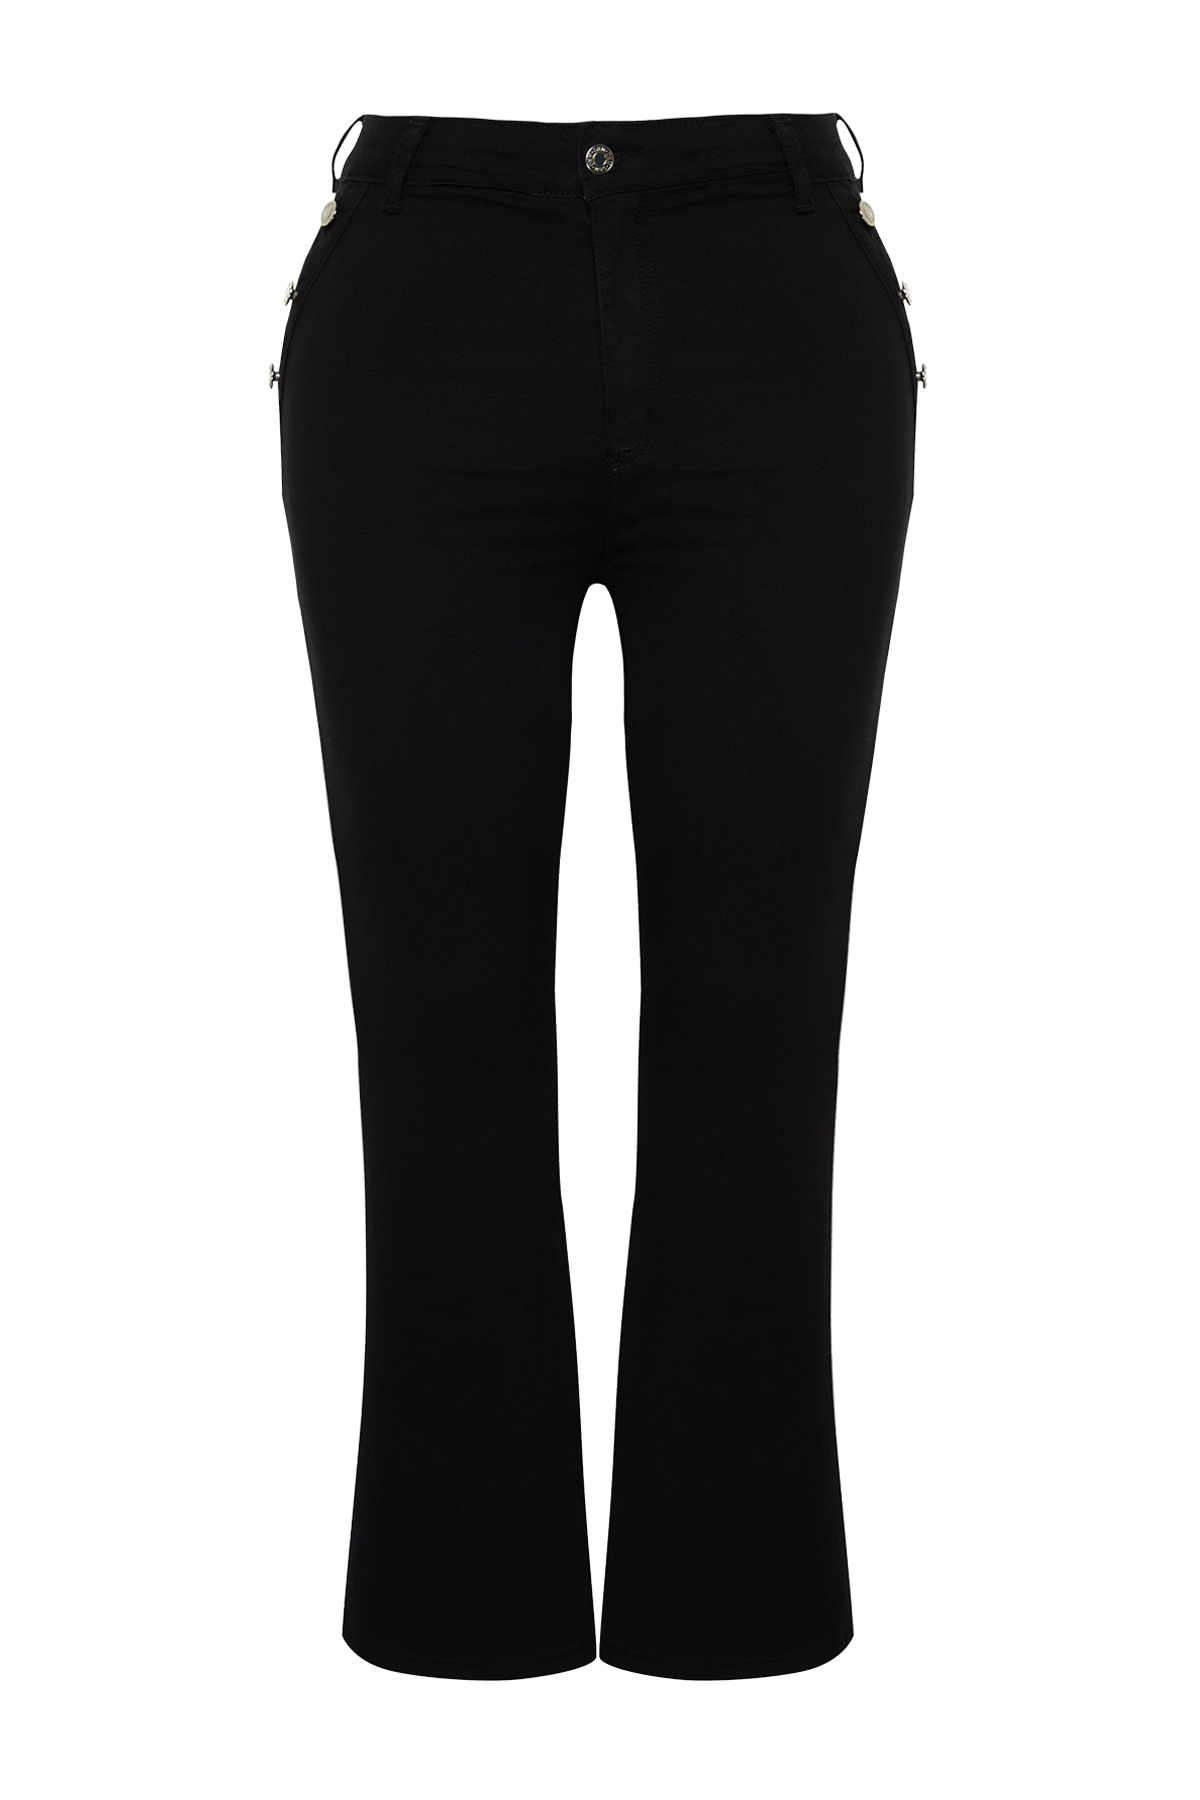 Trendyol Curve Black Button Detailed Spanish Leg Jeans